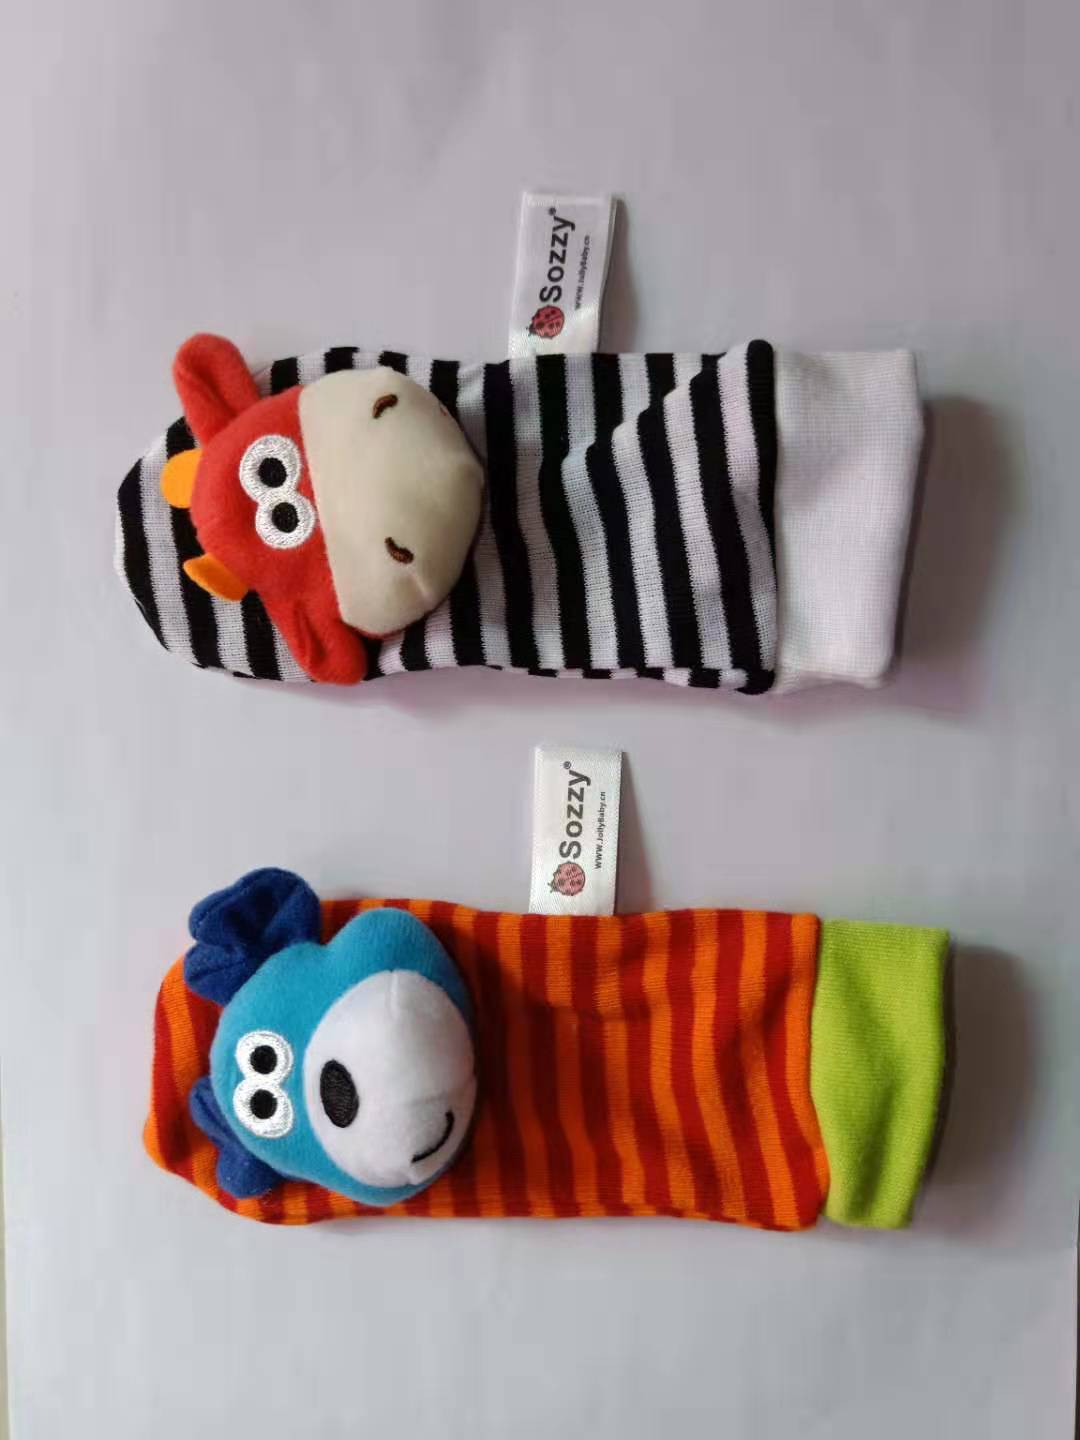 0-12 Months Soft Animal Rattle Infant Newborn Plush Sock Baby Toy Wrist Strap